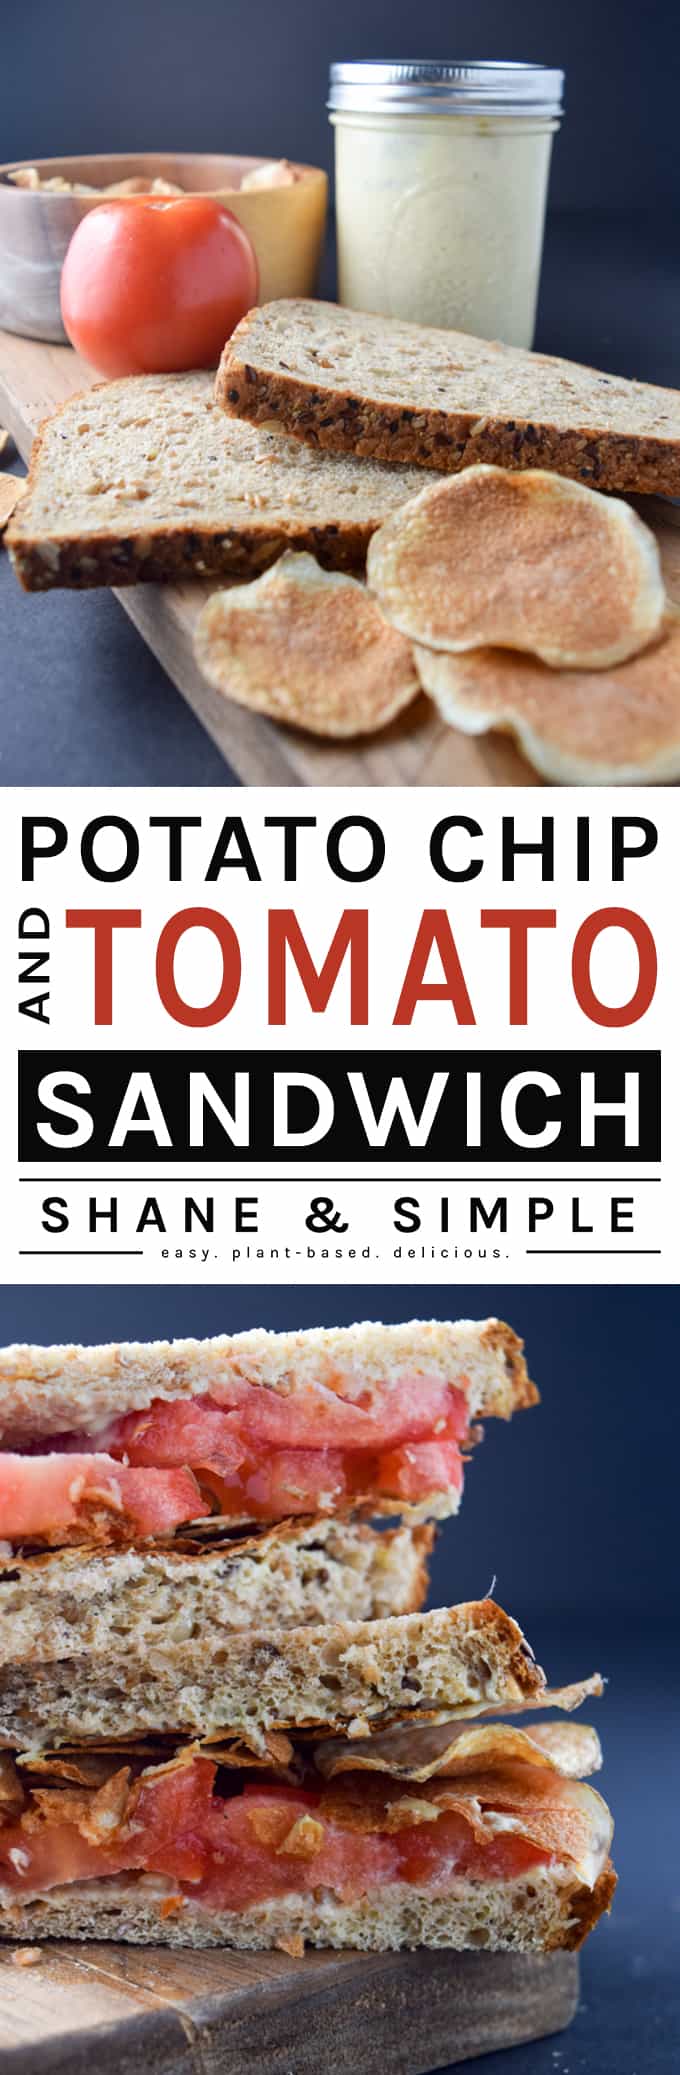 Potato Chip Tomato Sandwich